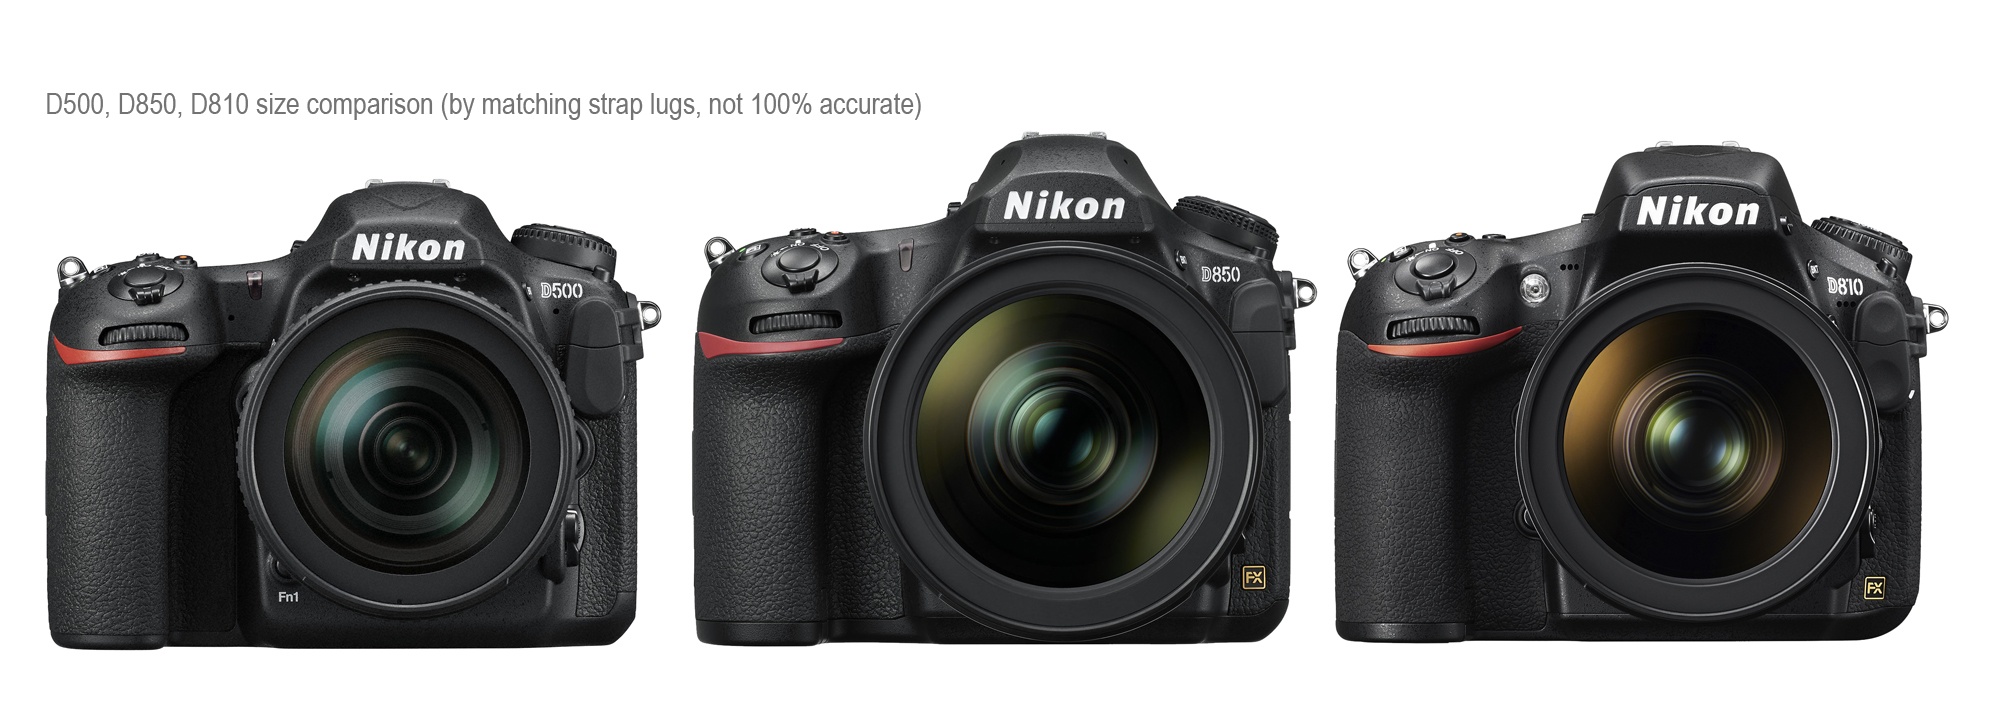 Additional Nikon D850 coverage - Nikon Rumors